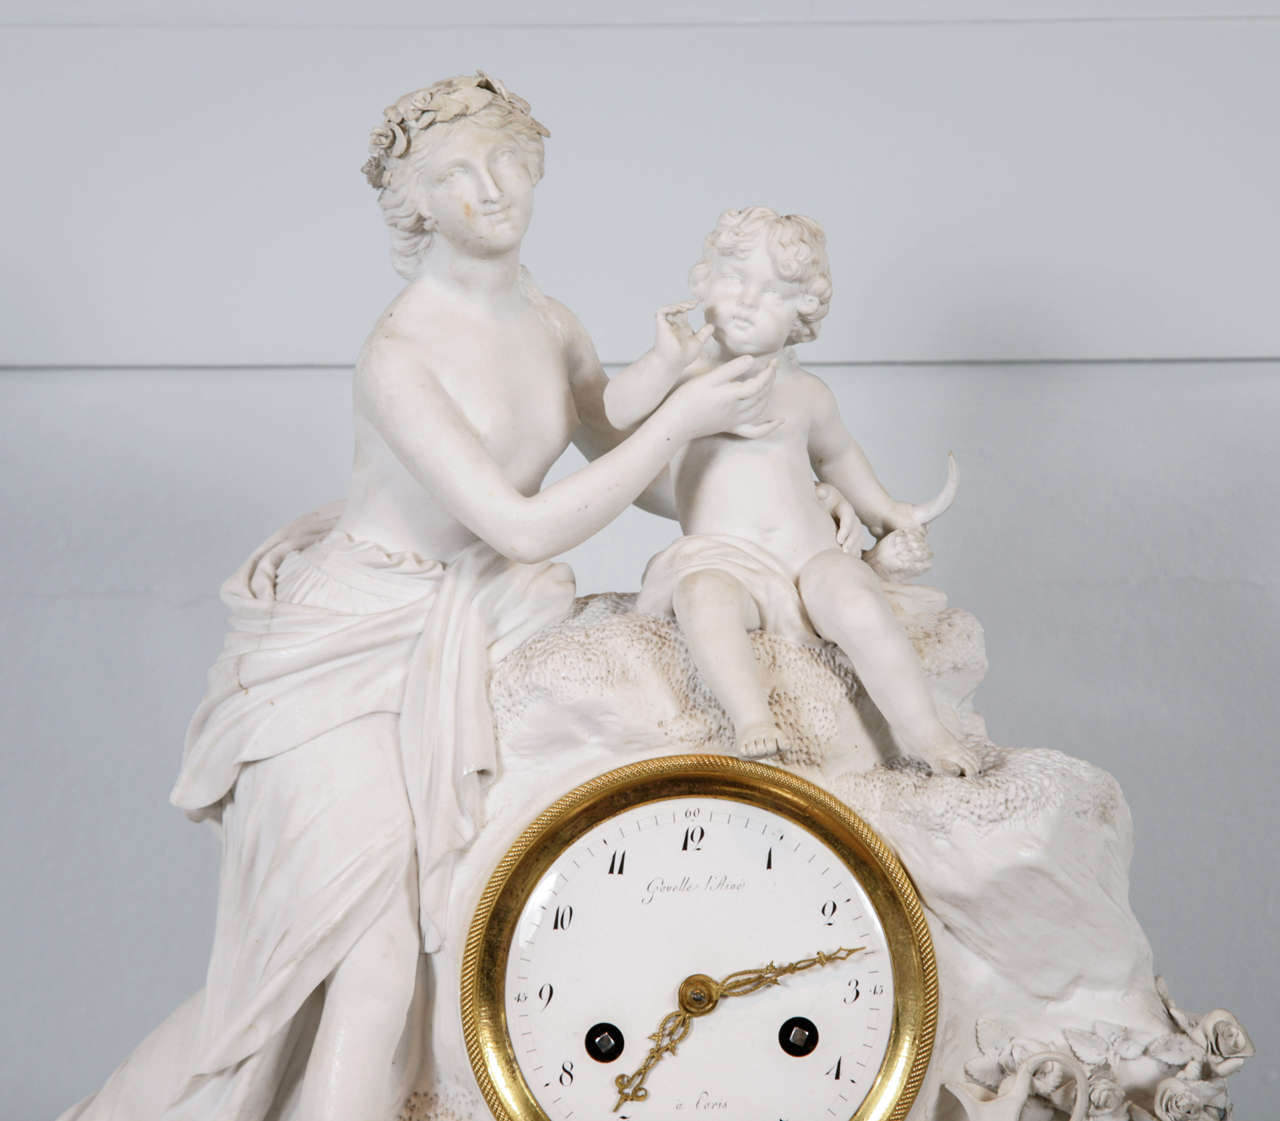 Antique French Mantel Clock by Gavelle L'Aine a Paris, France 1